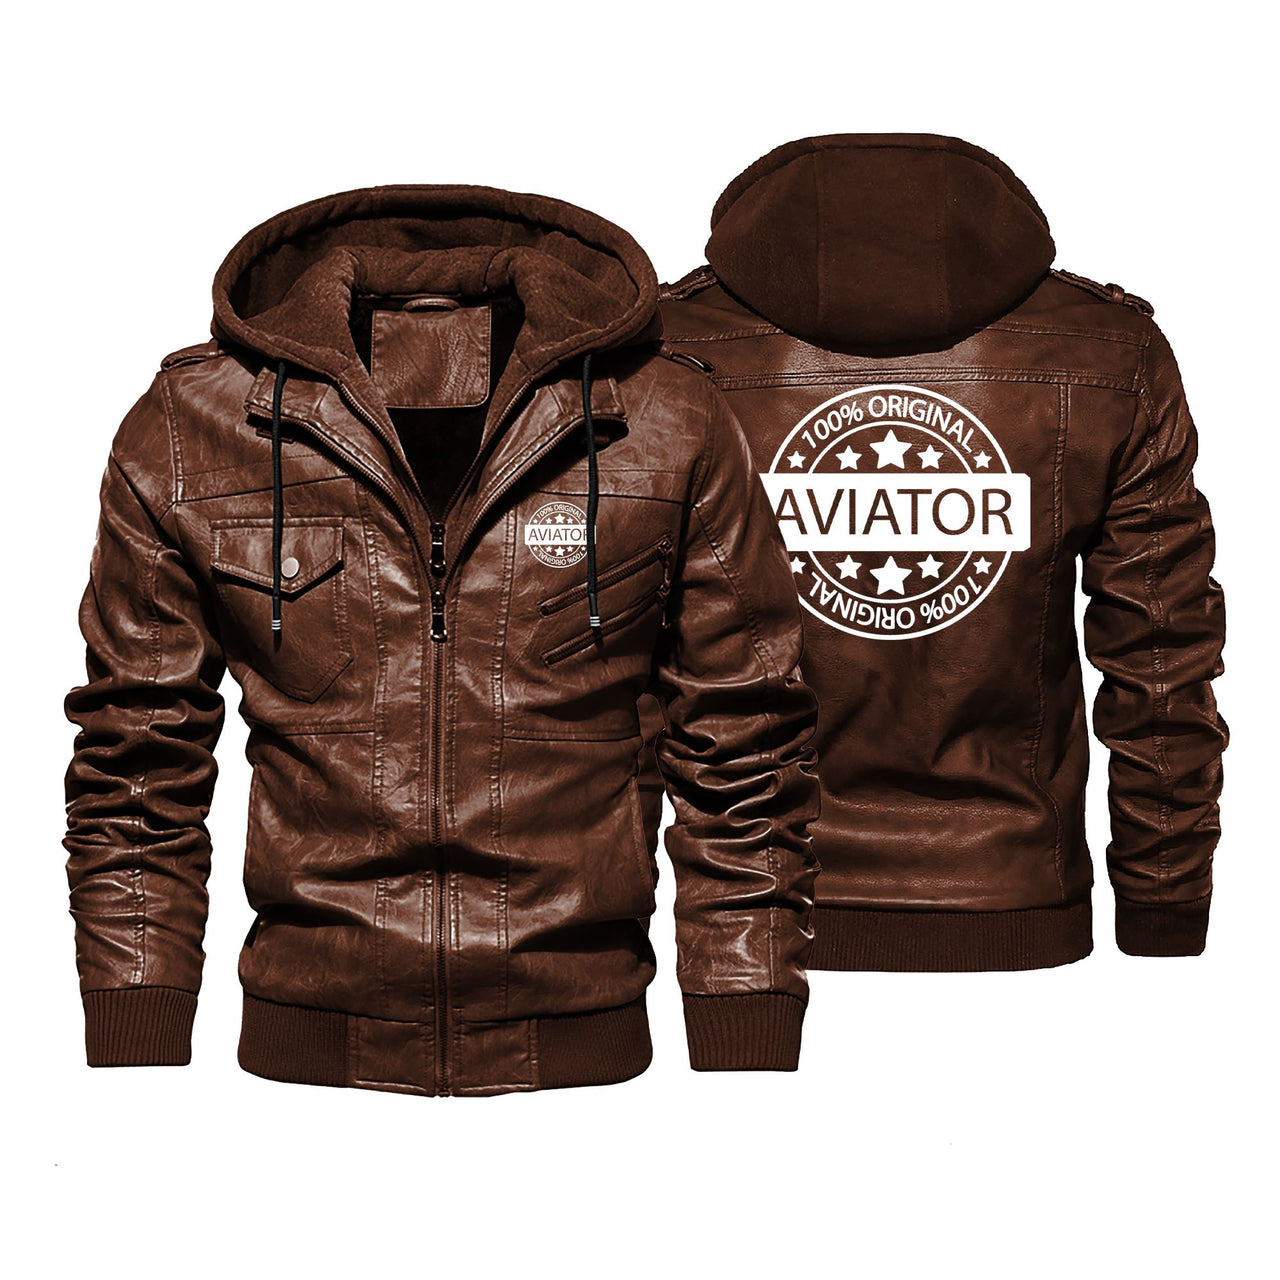 100 Original Aviator Designed Hooded Leather Jackets